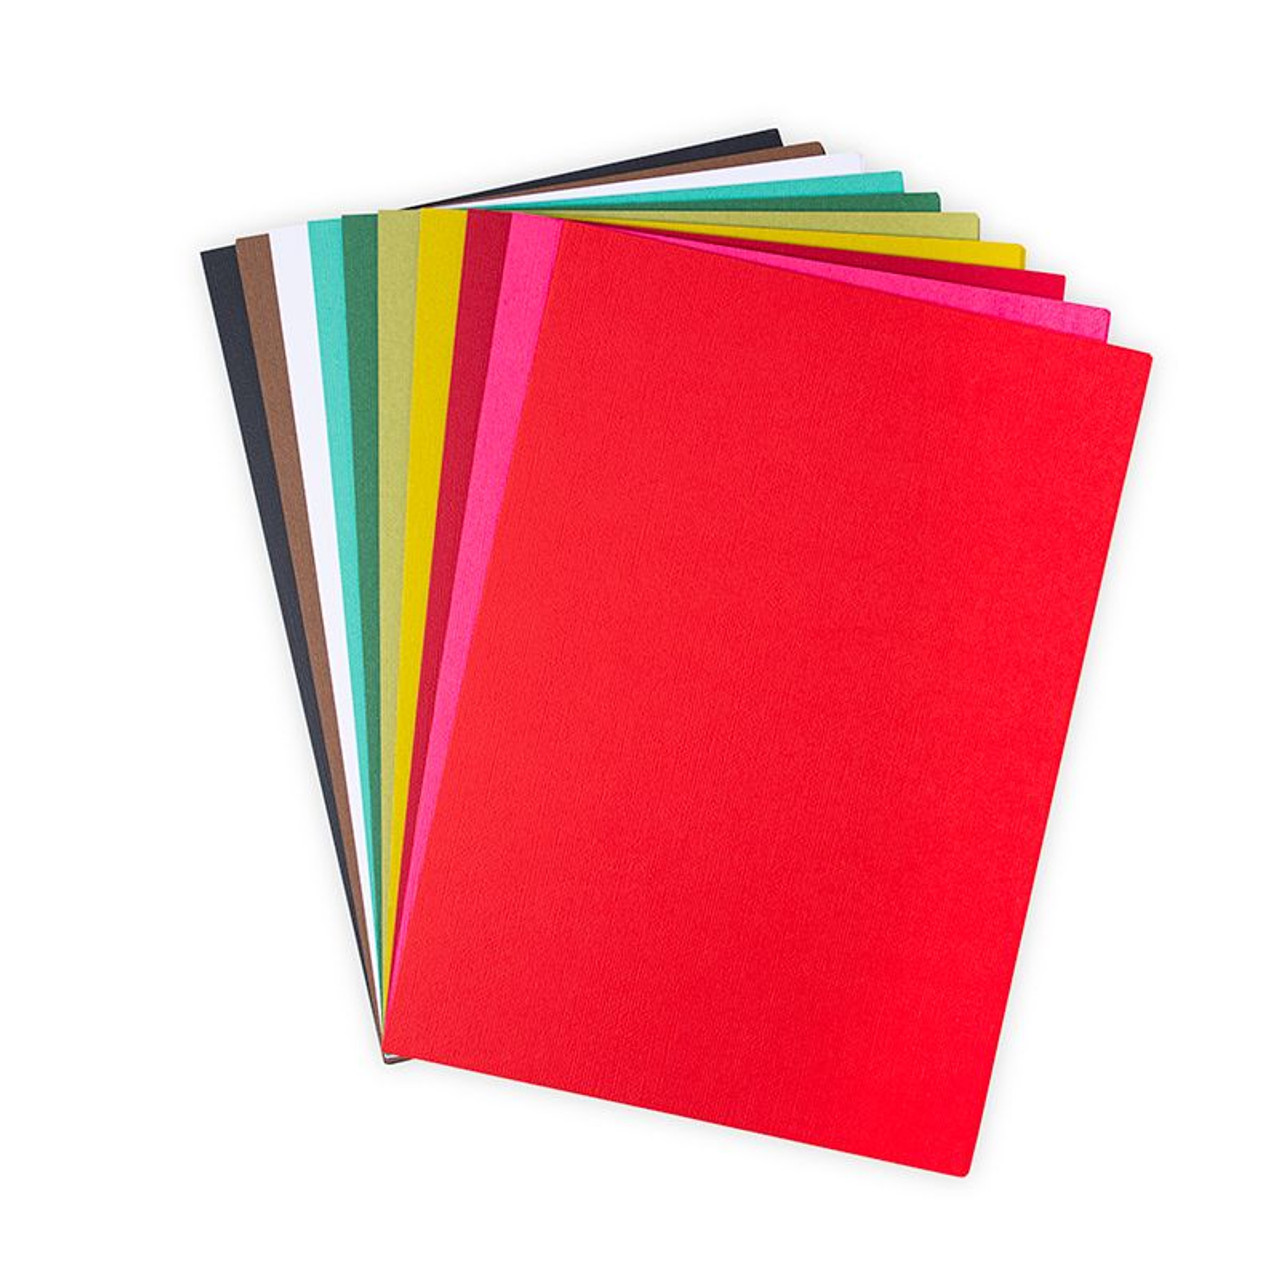 Sizzix Surfacez, Colored Cardstock 60PK - Festive - Scrapbooking